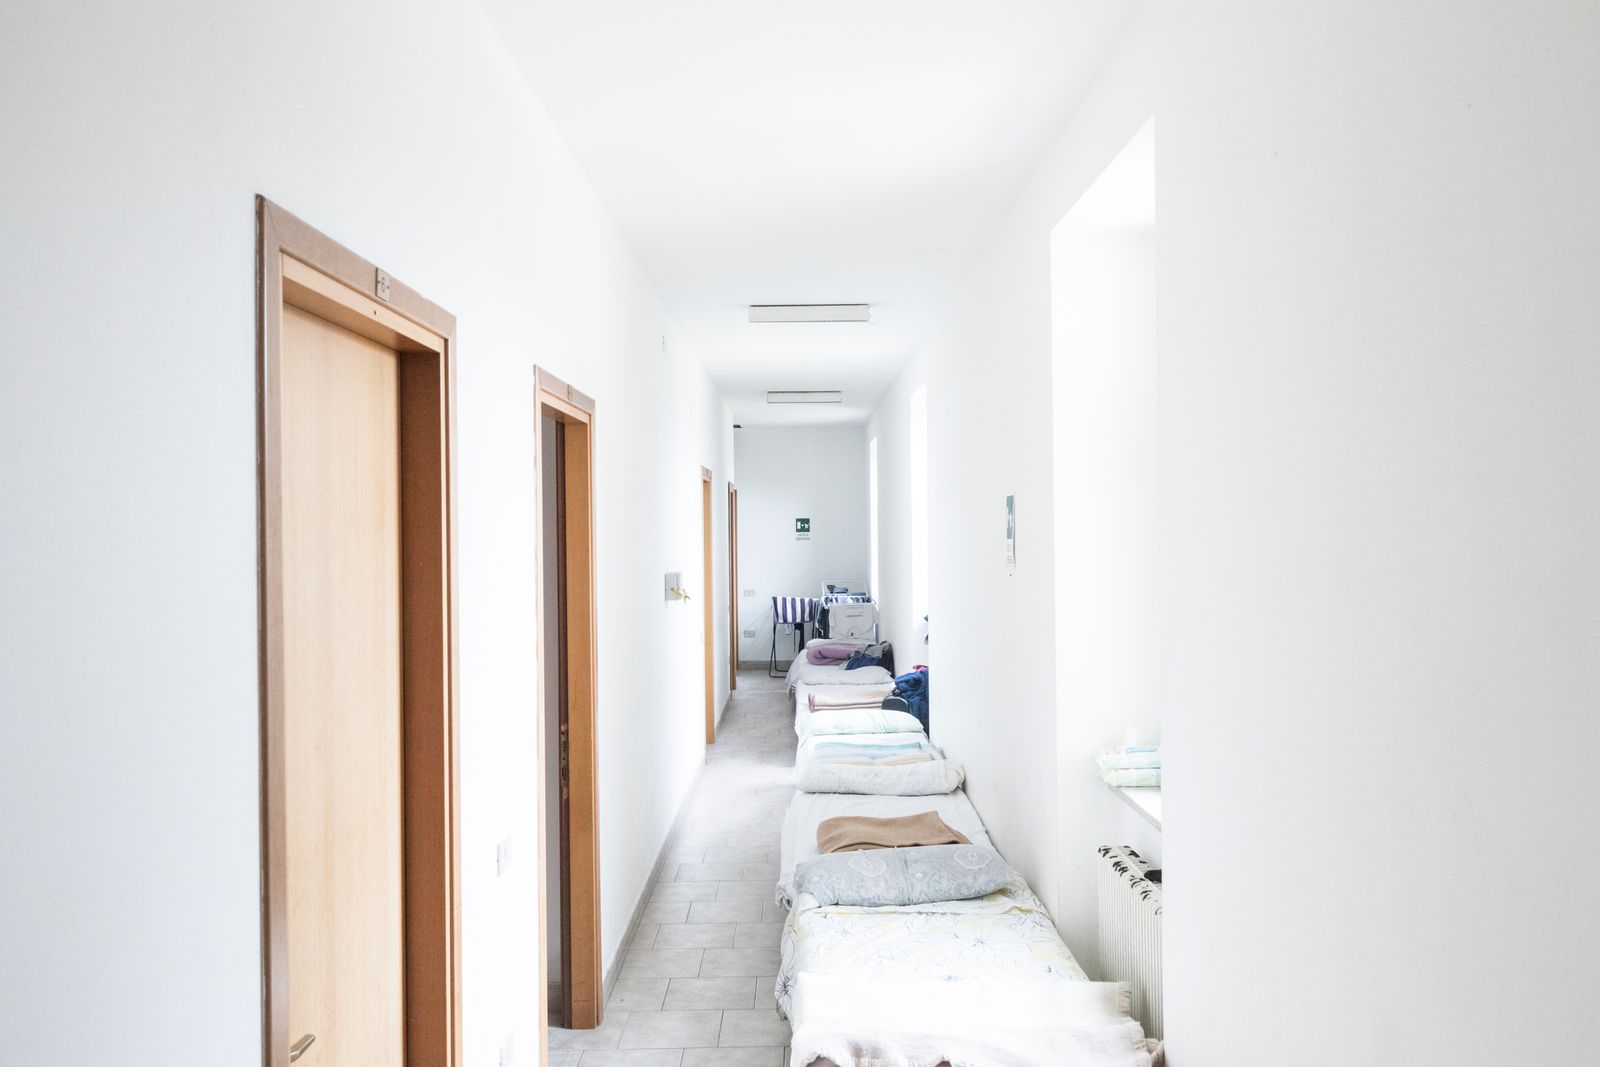 © Manuela Schirra and Fabrizio Giraldi  - Corridor used as a dormitory in the Diocesan Caritas building.